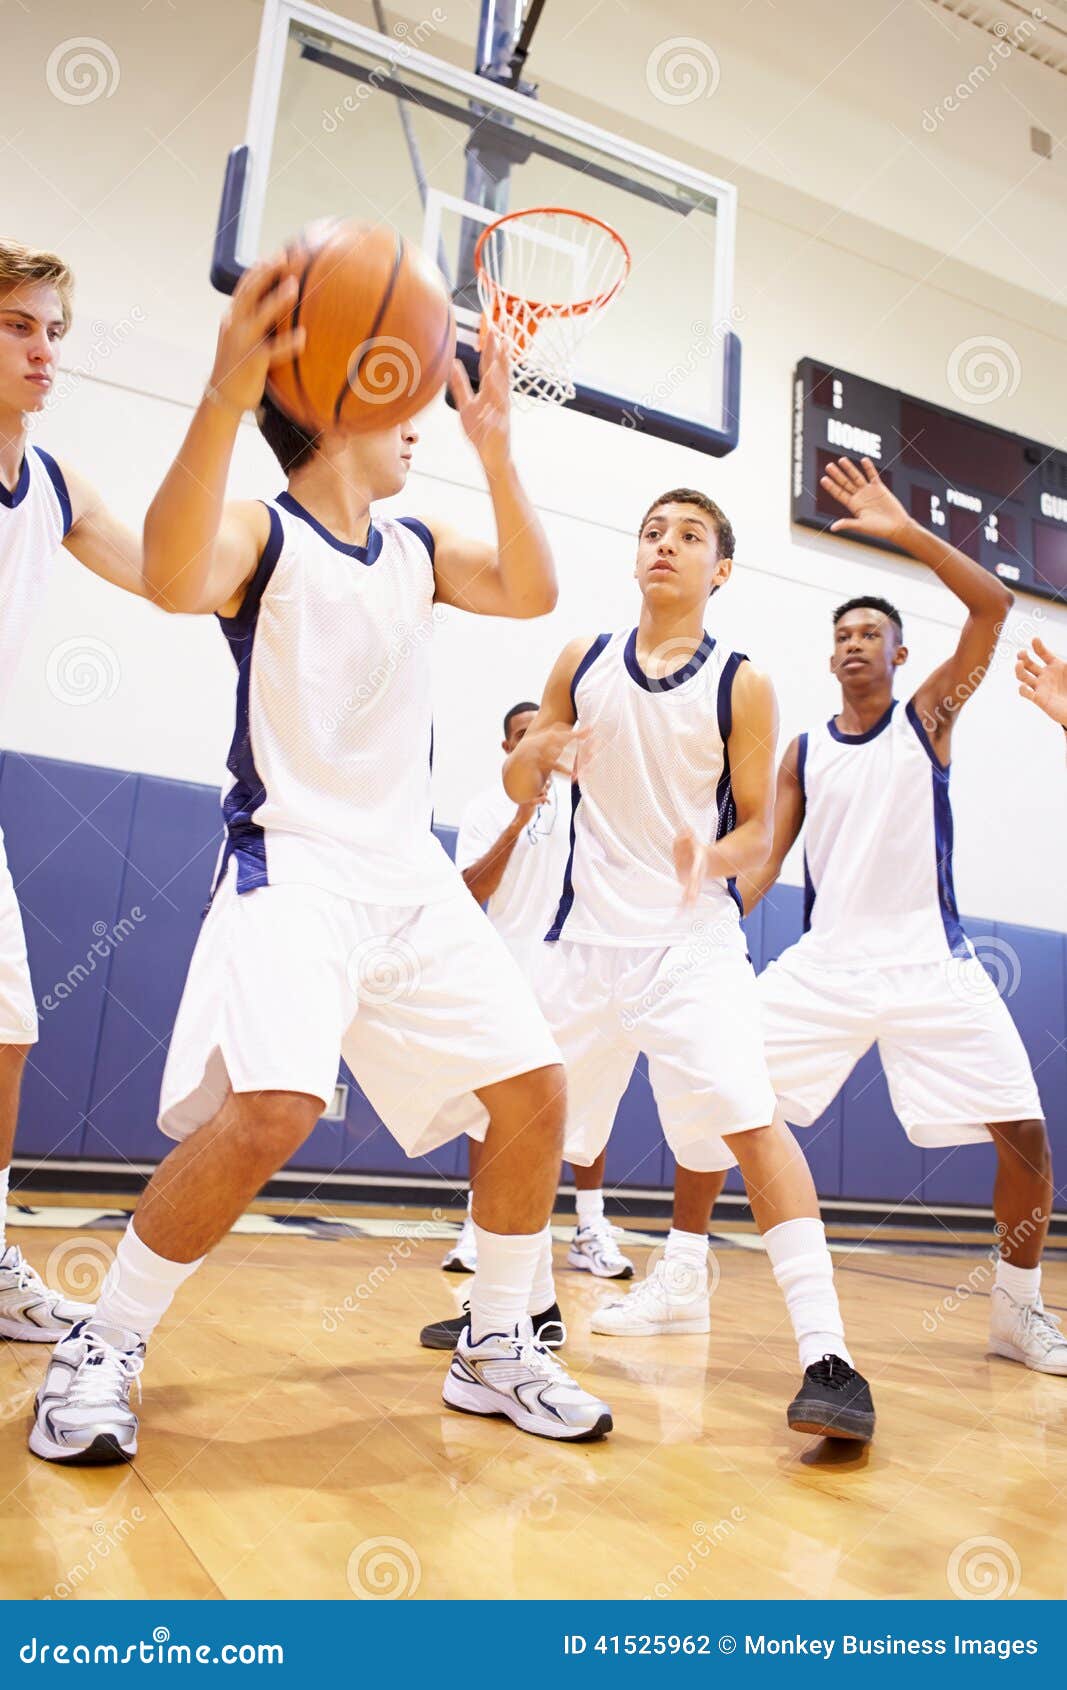 male high school basketball team playing game